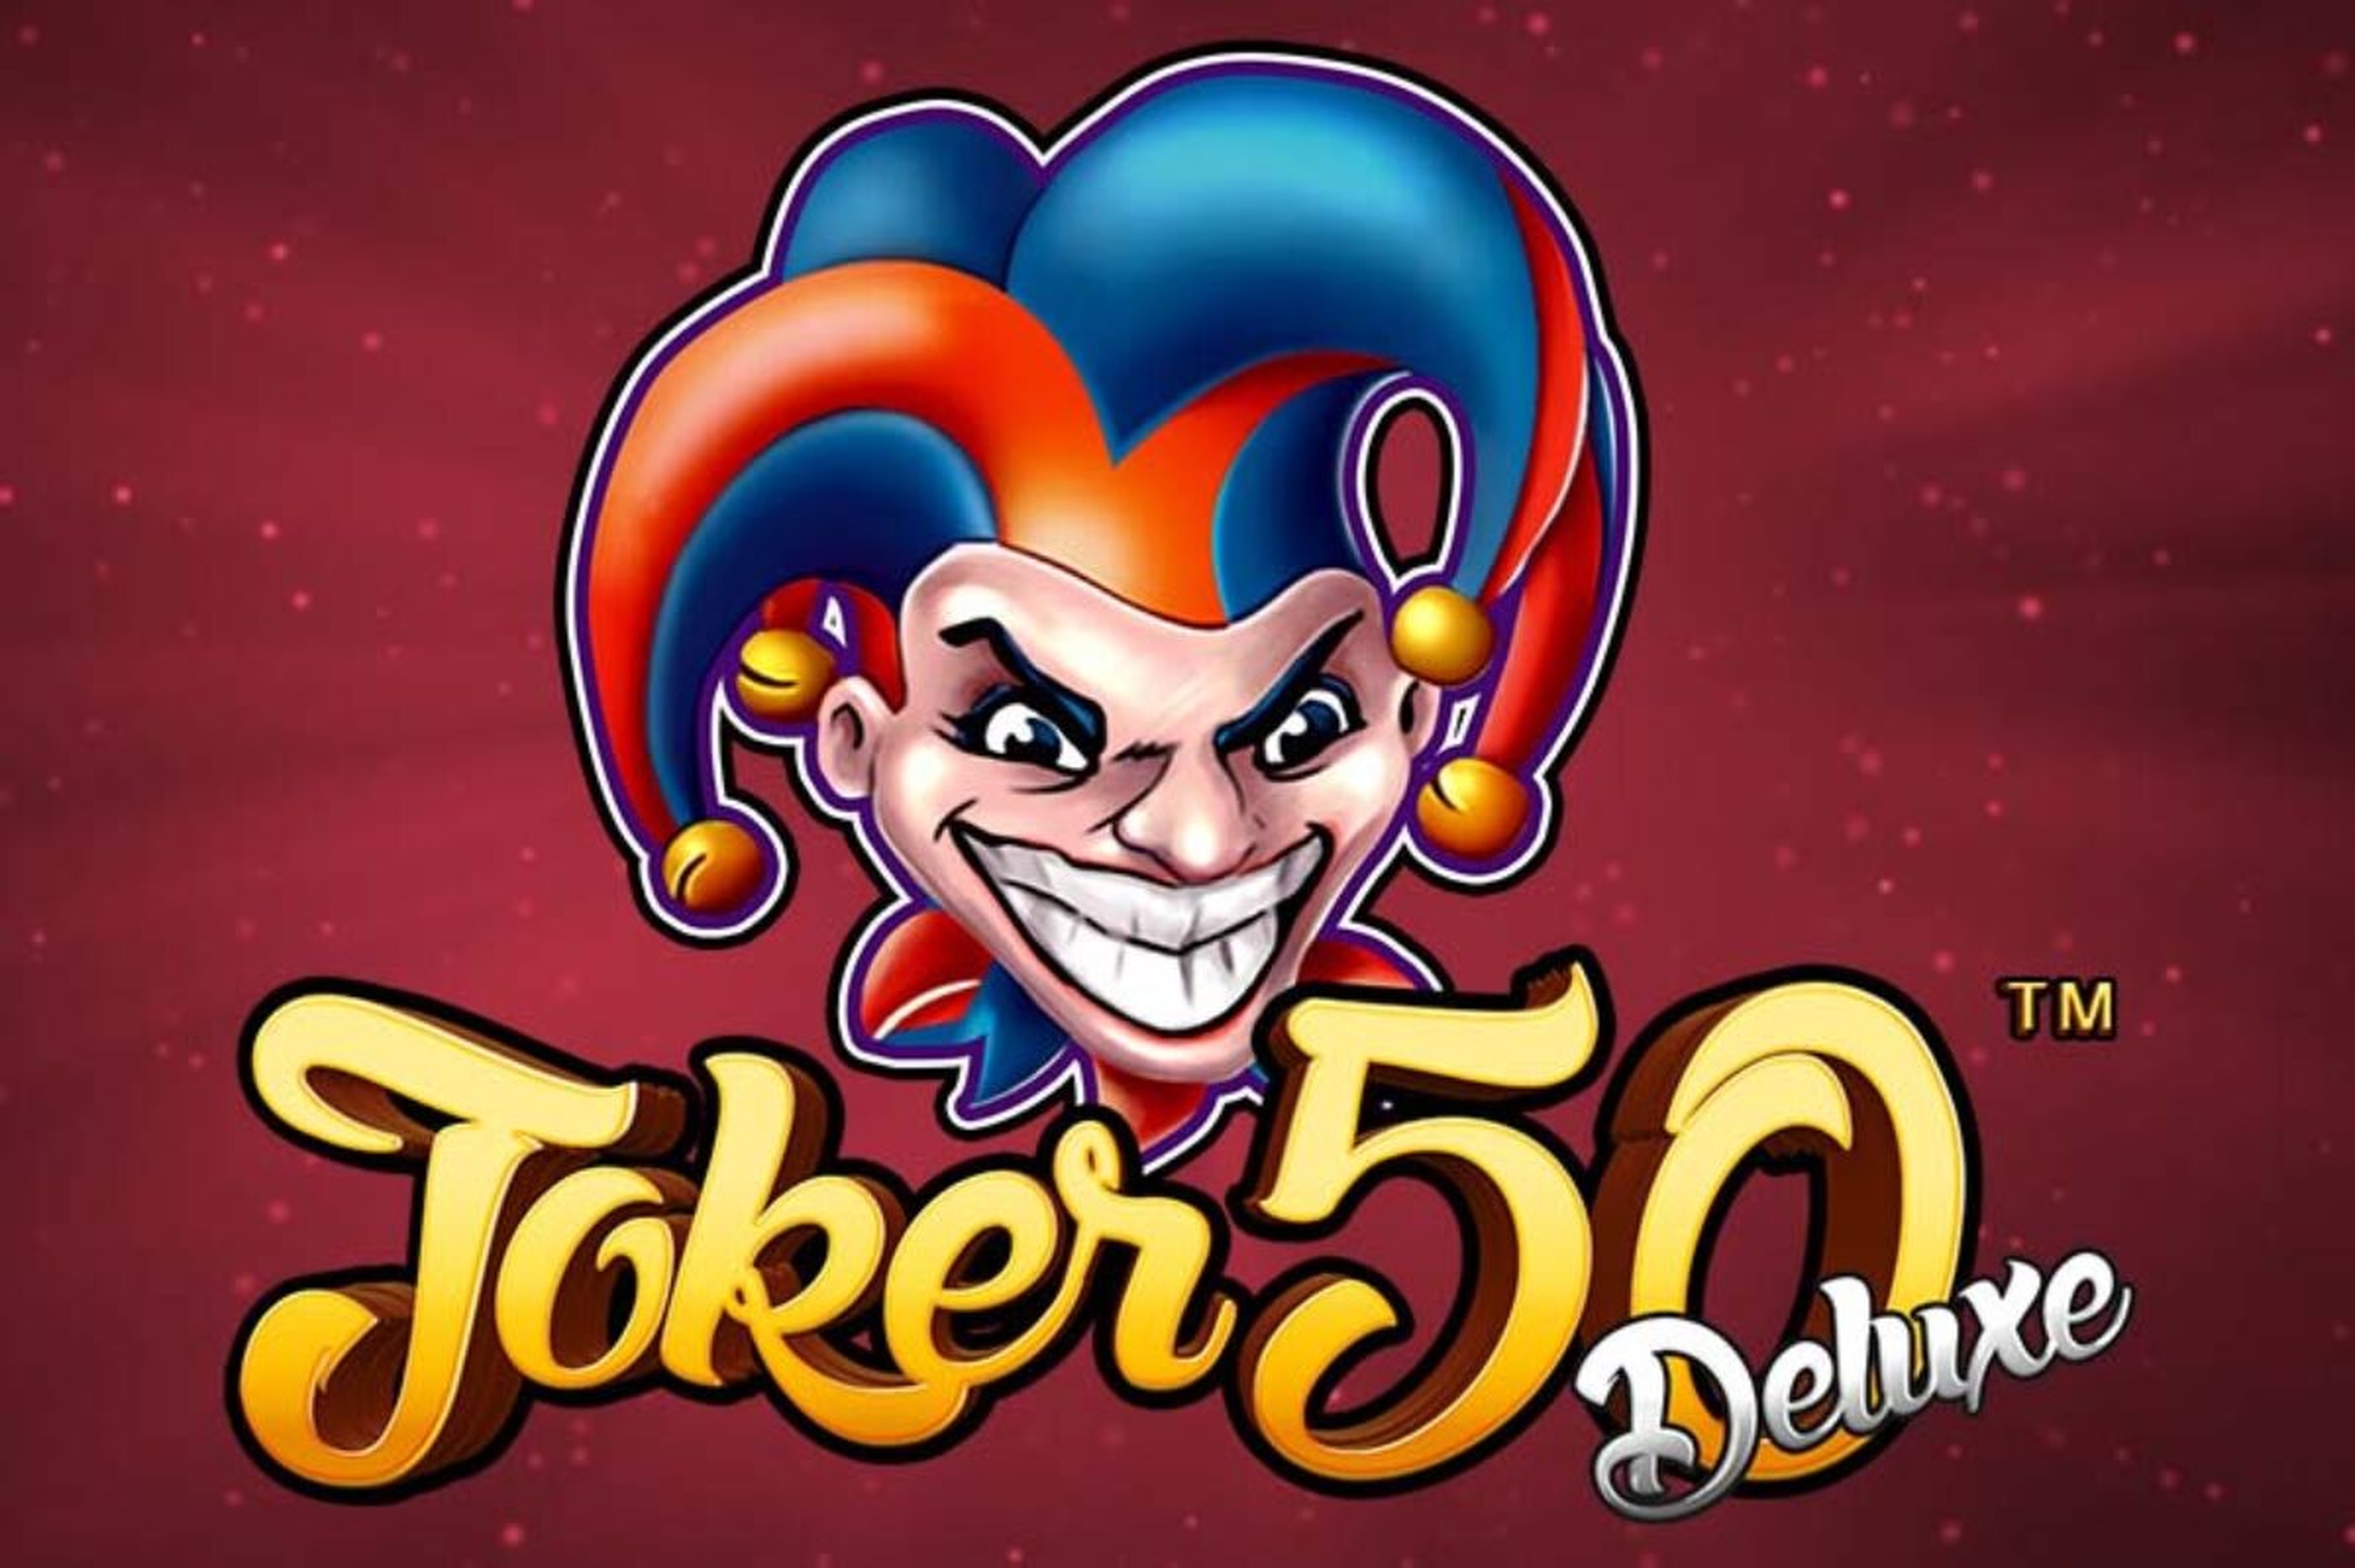 The Joker Fruits Deluxe Online Slot Demo Game by Novomatic